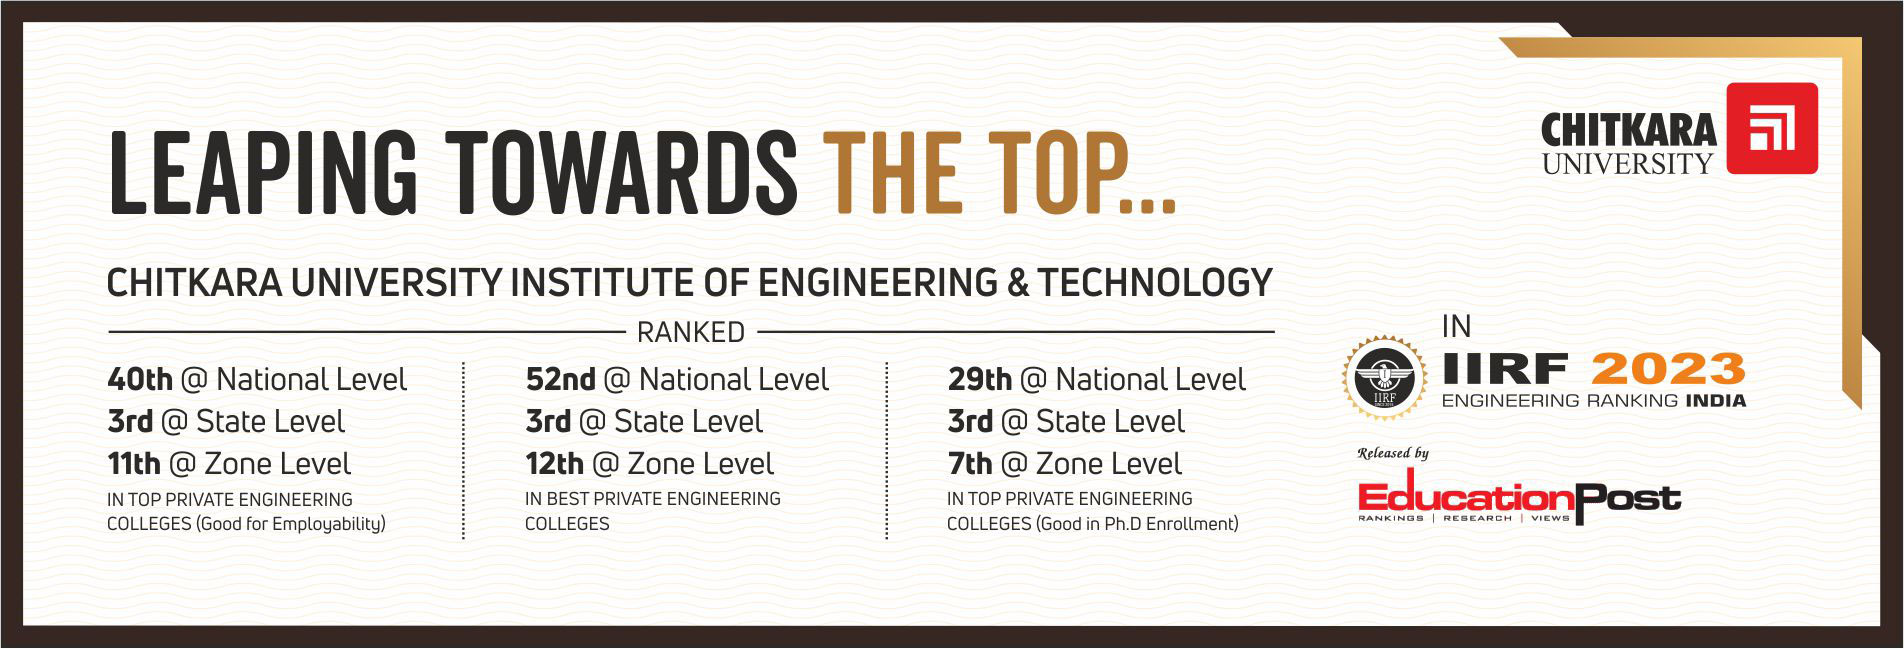  IIRF 2023 Engineering Ranking India- Chitkara University